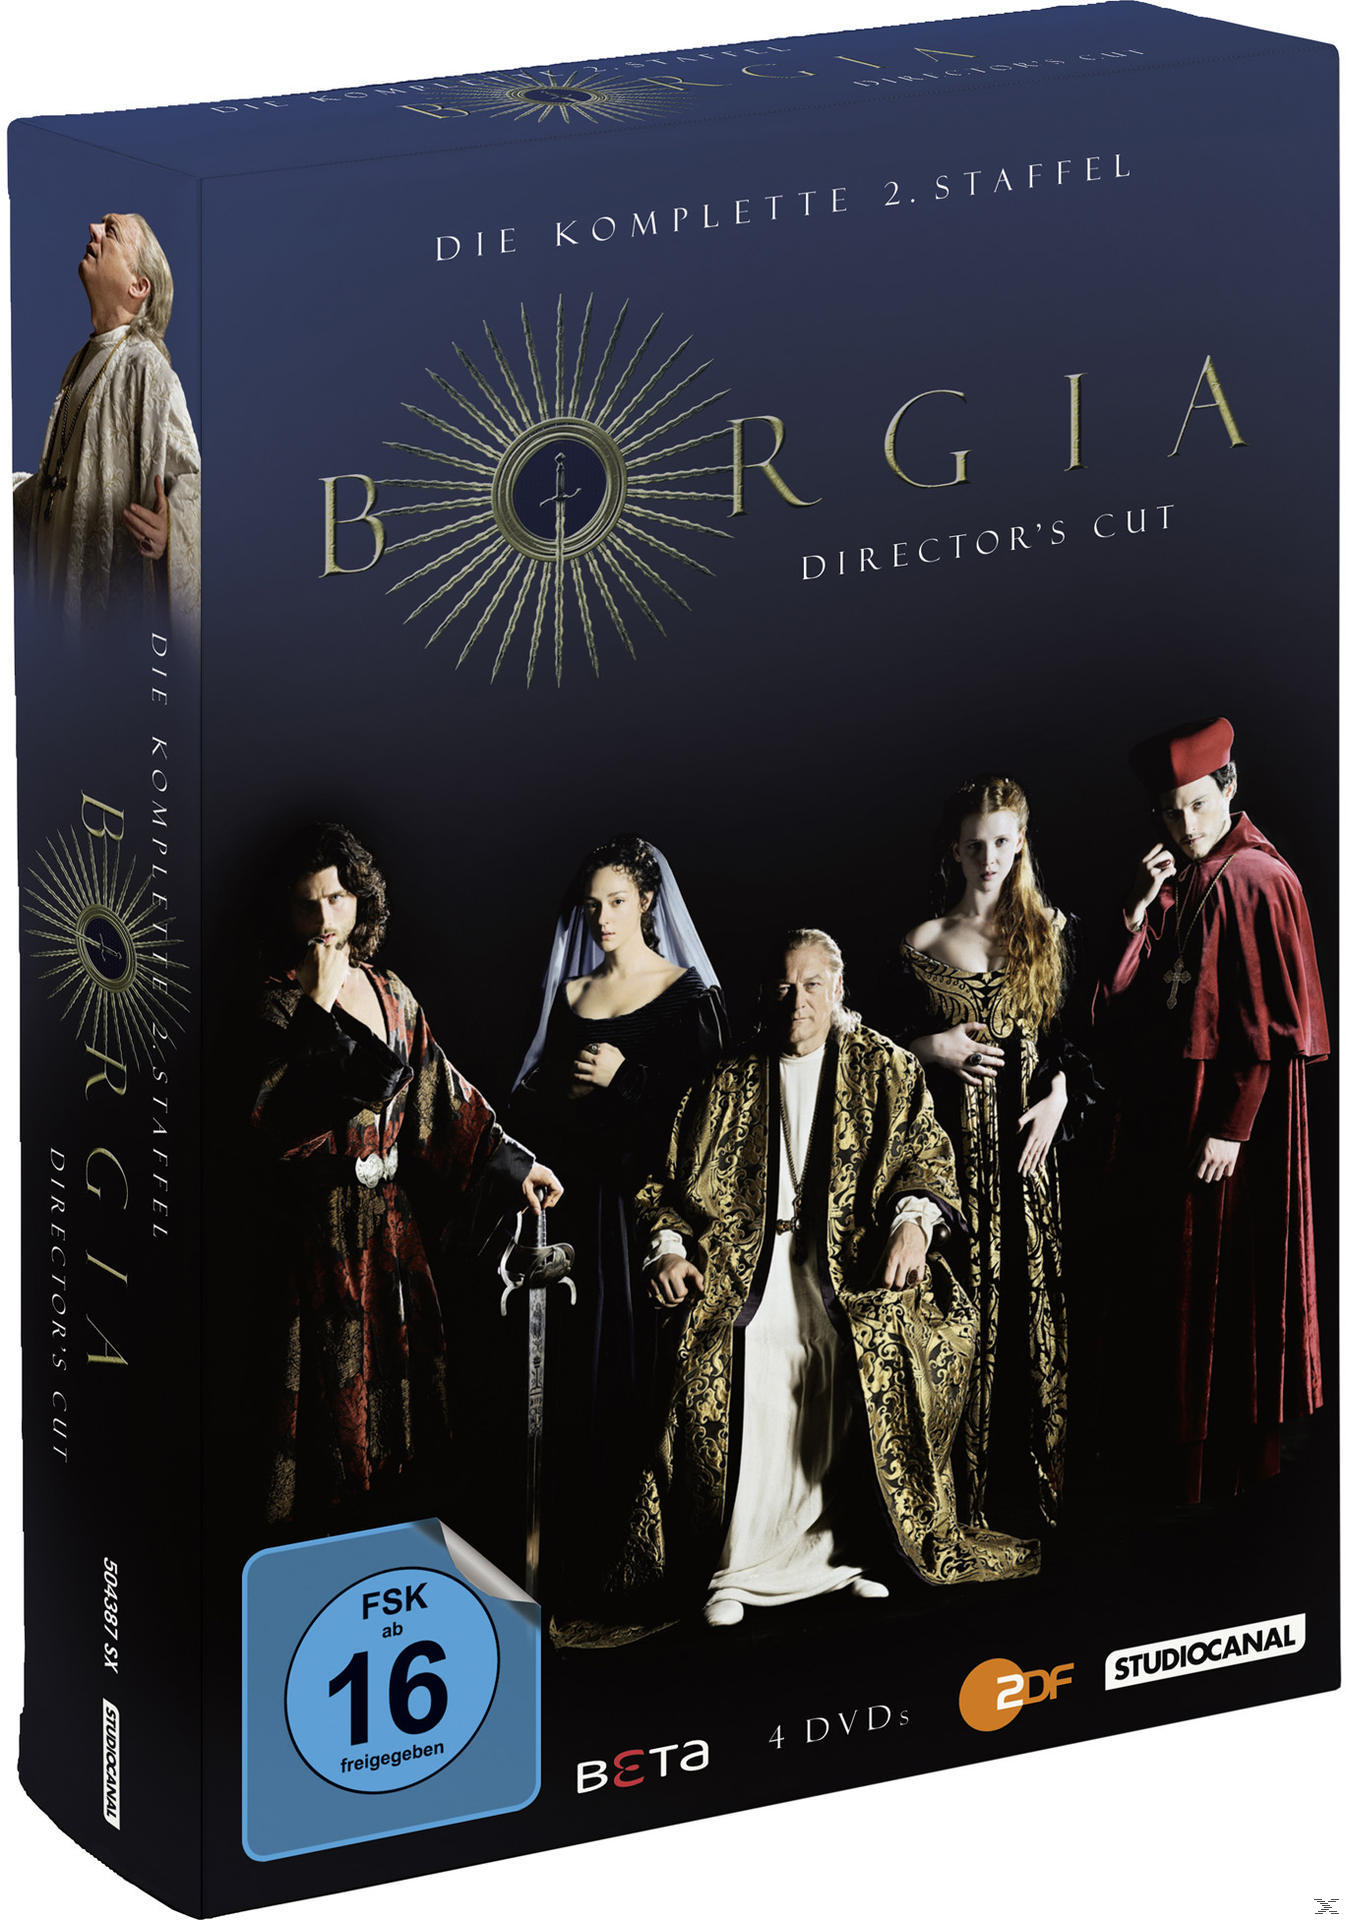 Cut) - DVD Borgia (Director’s 2 Staffel